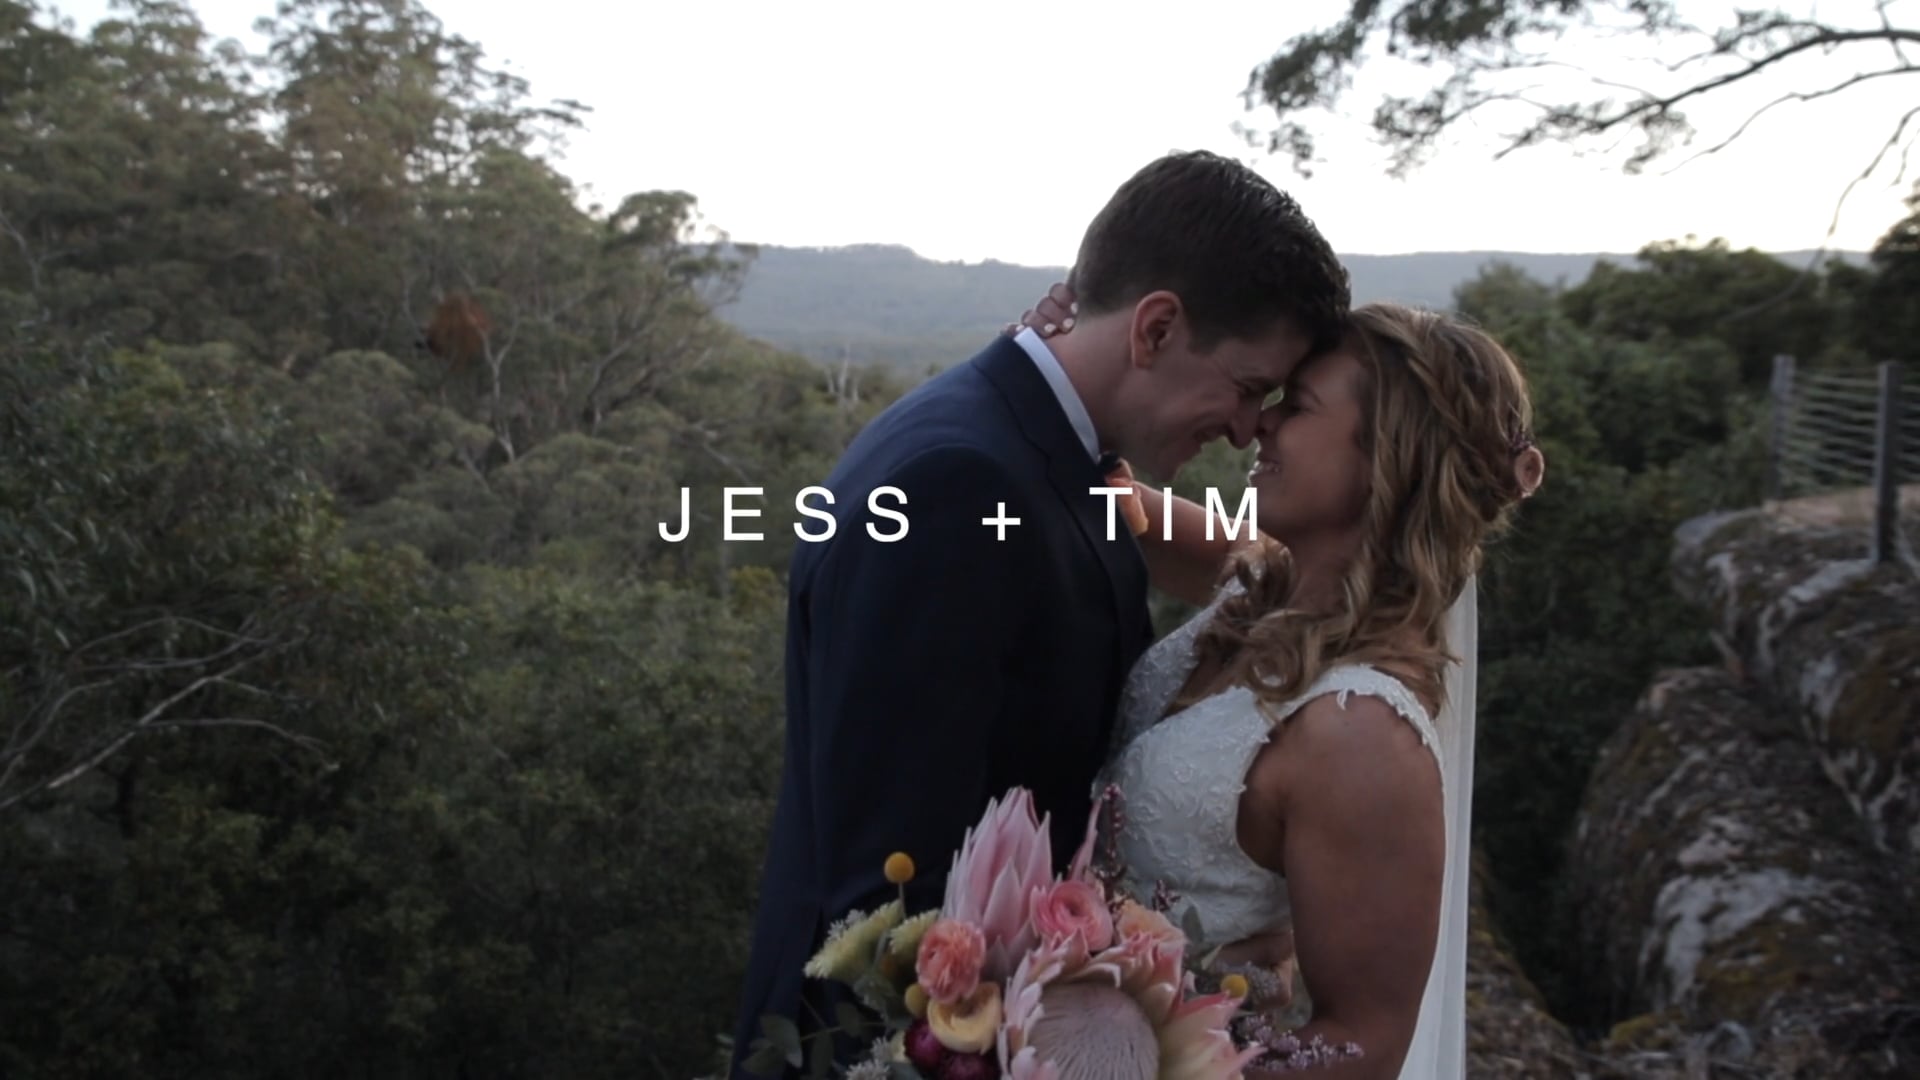 Jess and Tim - Wildwood, Kangaroo Valley - Highlight Film by Way Up High